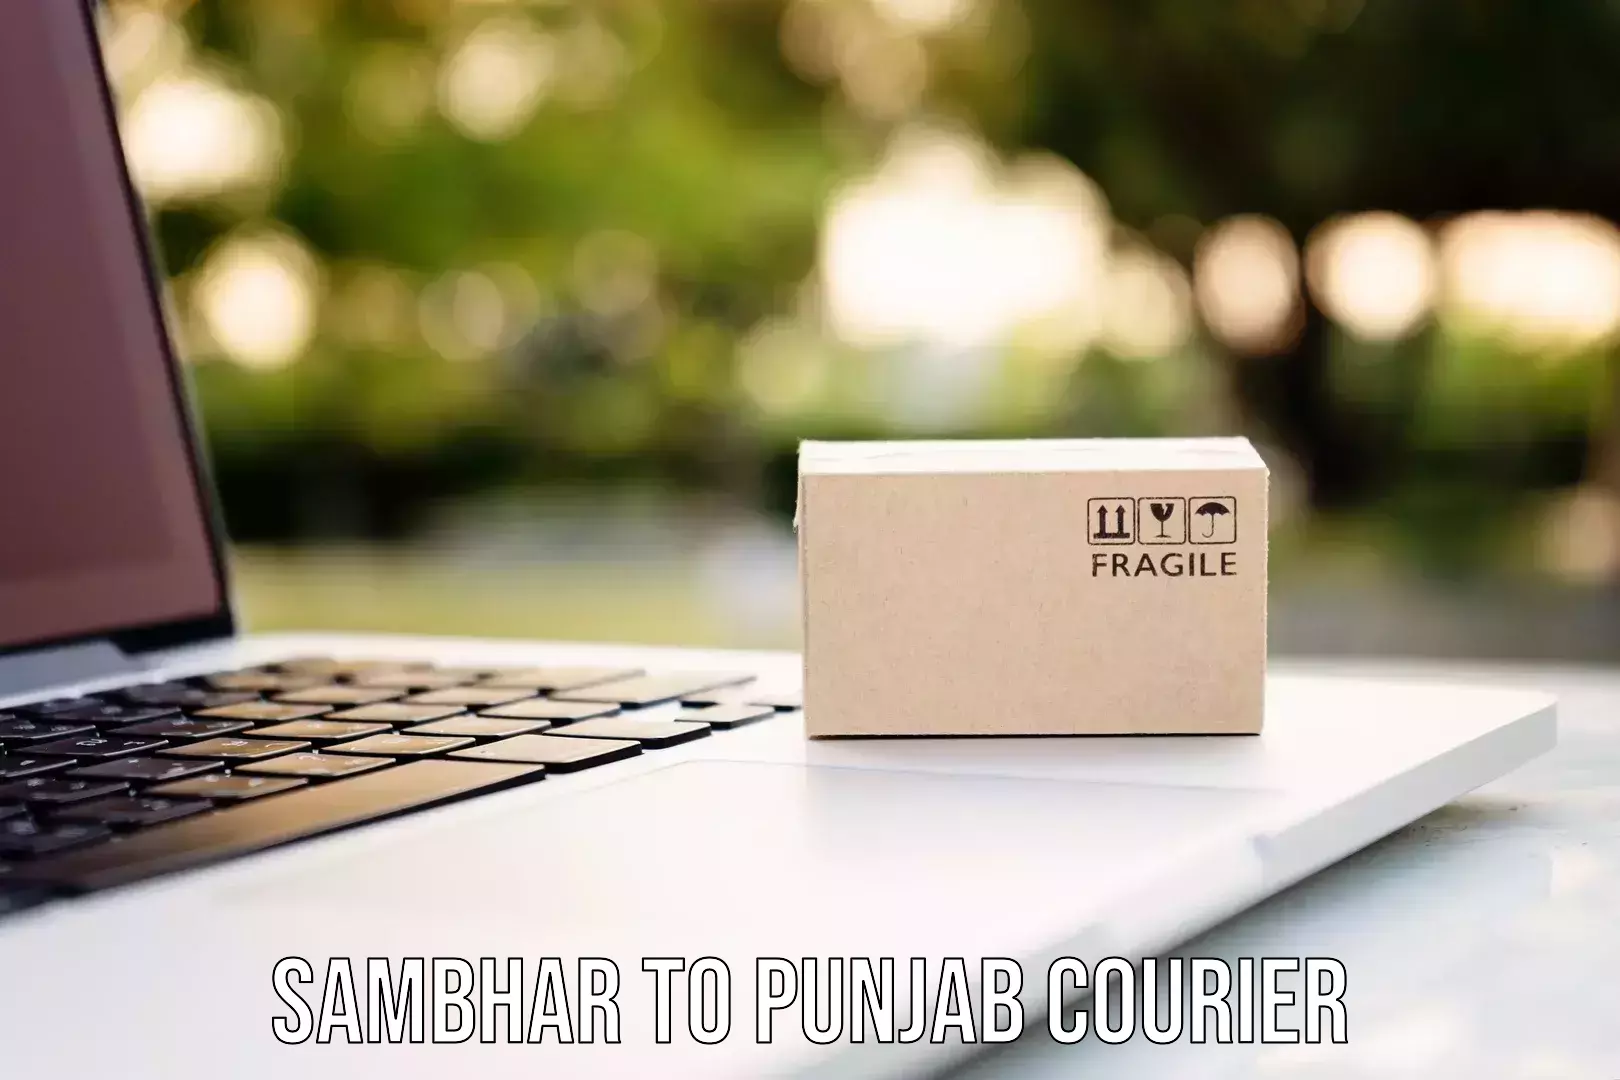 24-hour courier service Sambhar to Punjab